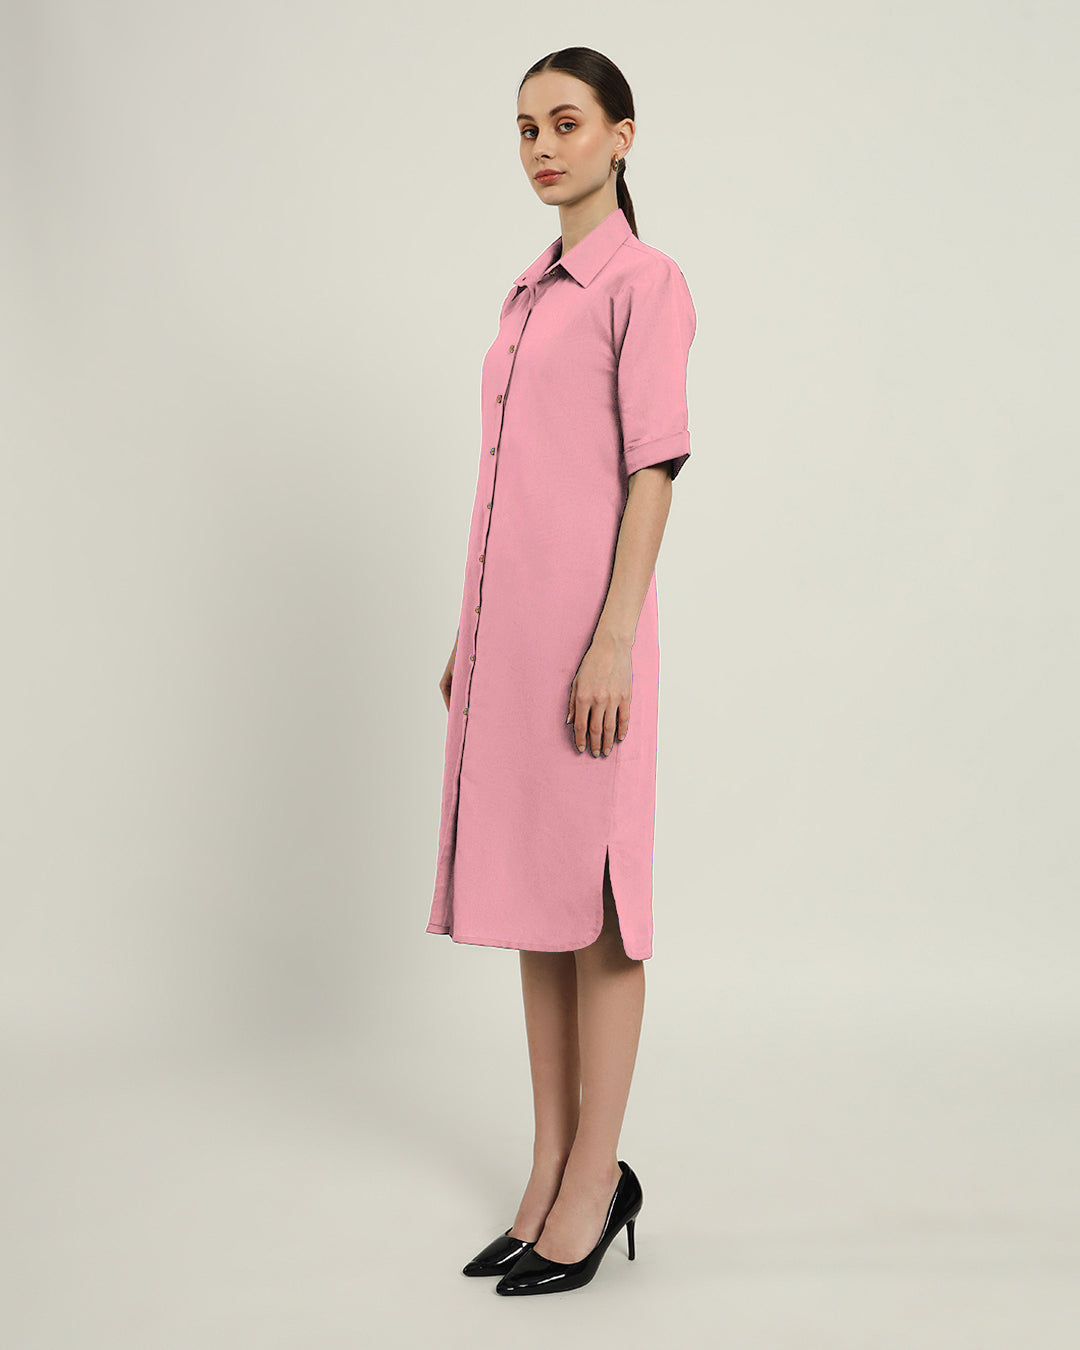 The Tampa Fondant Pink Cotton Dress